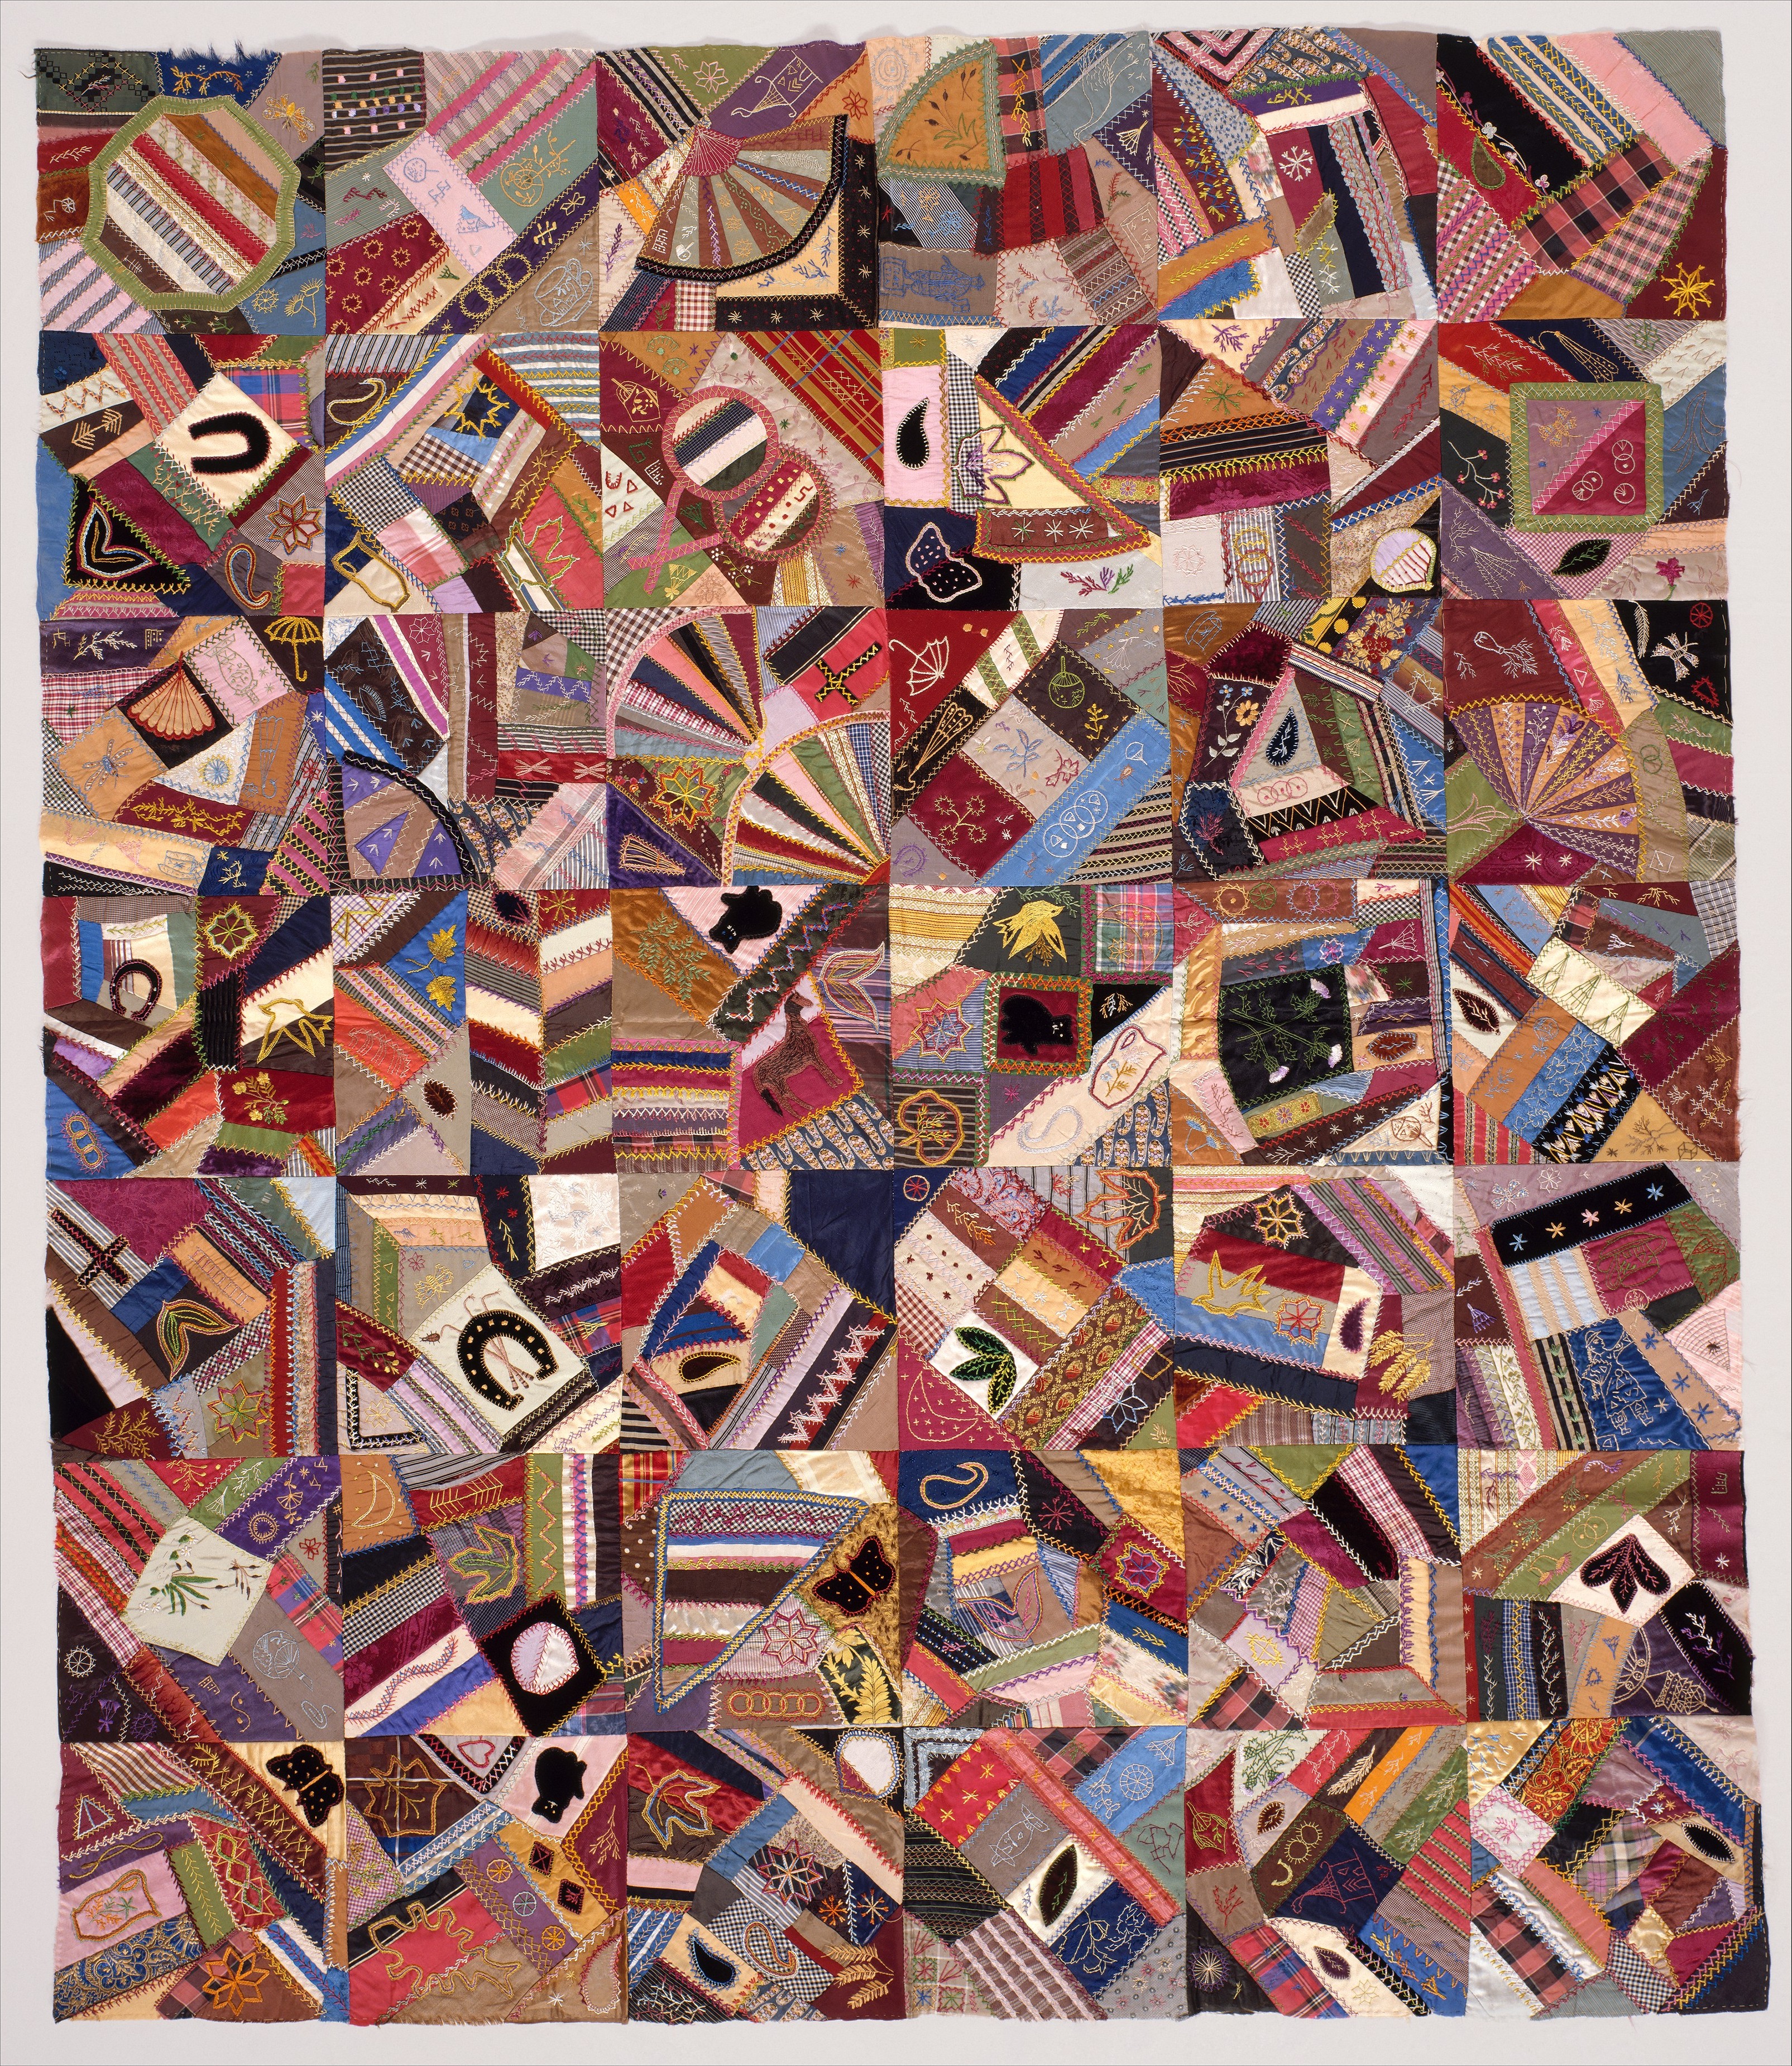 Quilt Top, Crazy pattern by Unknown Artist - ca. 1885 - 154.3 x 132.1 cm Metropolitan Museum of Art